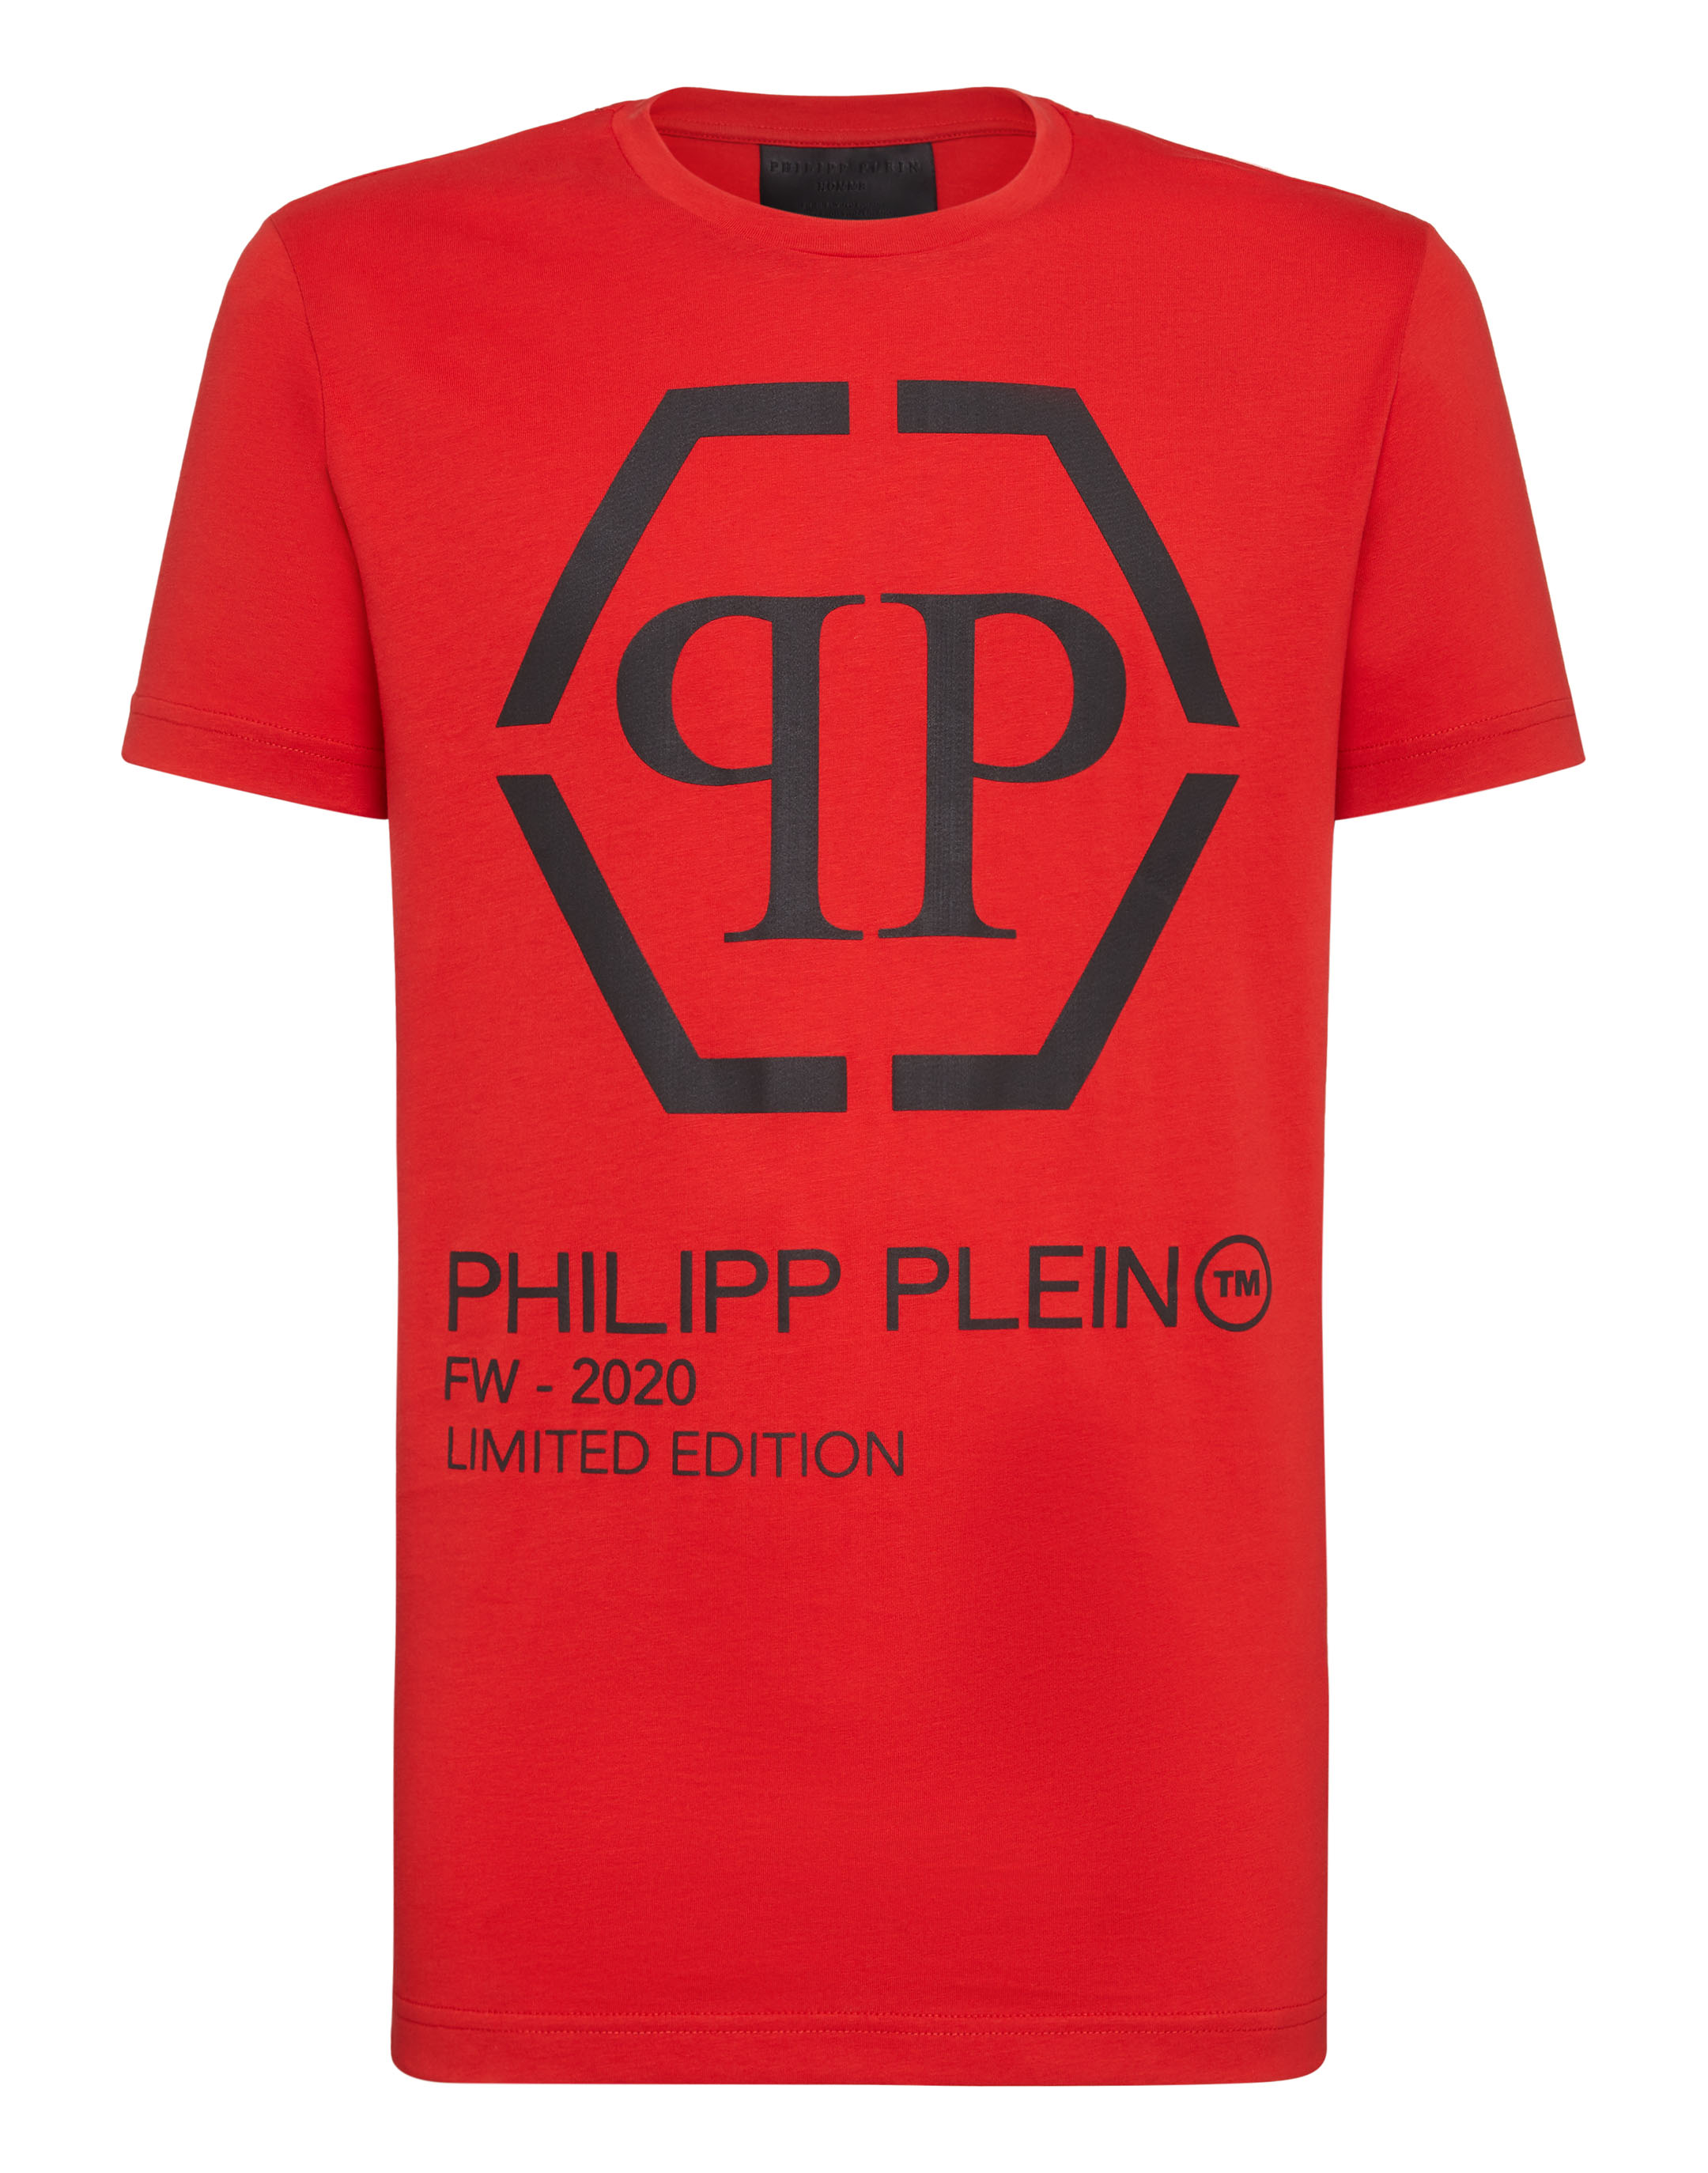 philipp plein t shirt red